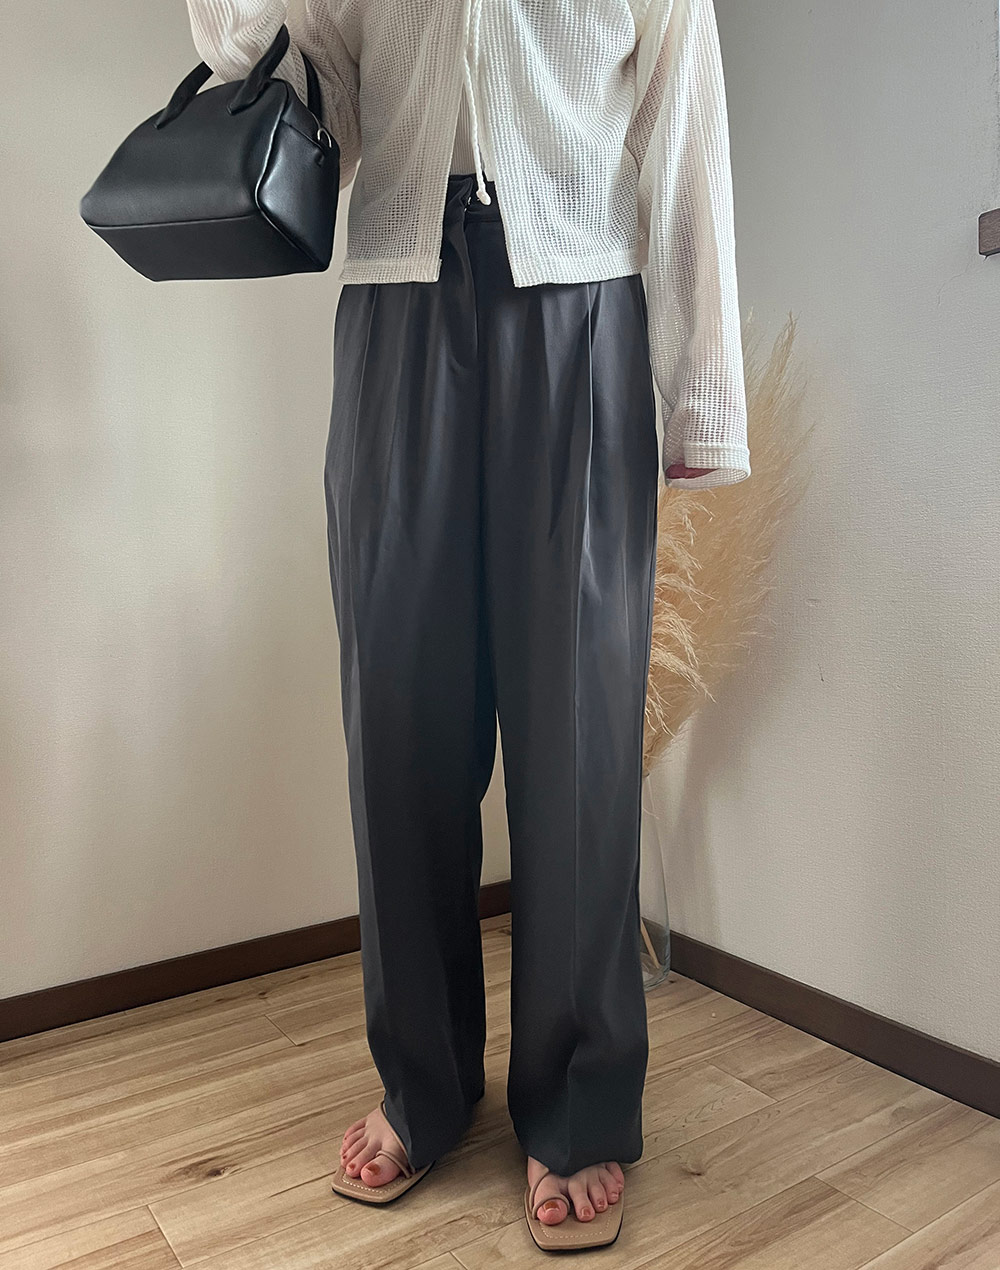 Slackspants・p280581（パンツ/パンツ）| rirry_71 | 東京ガールズマーケット